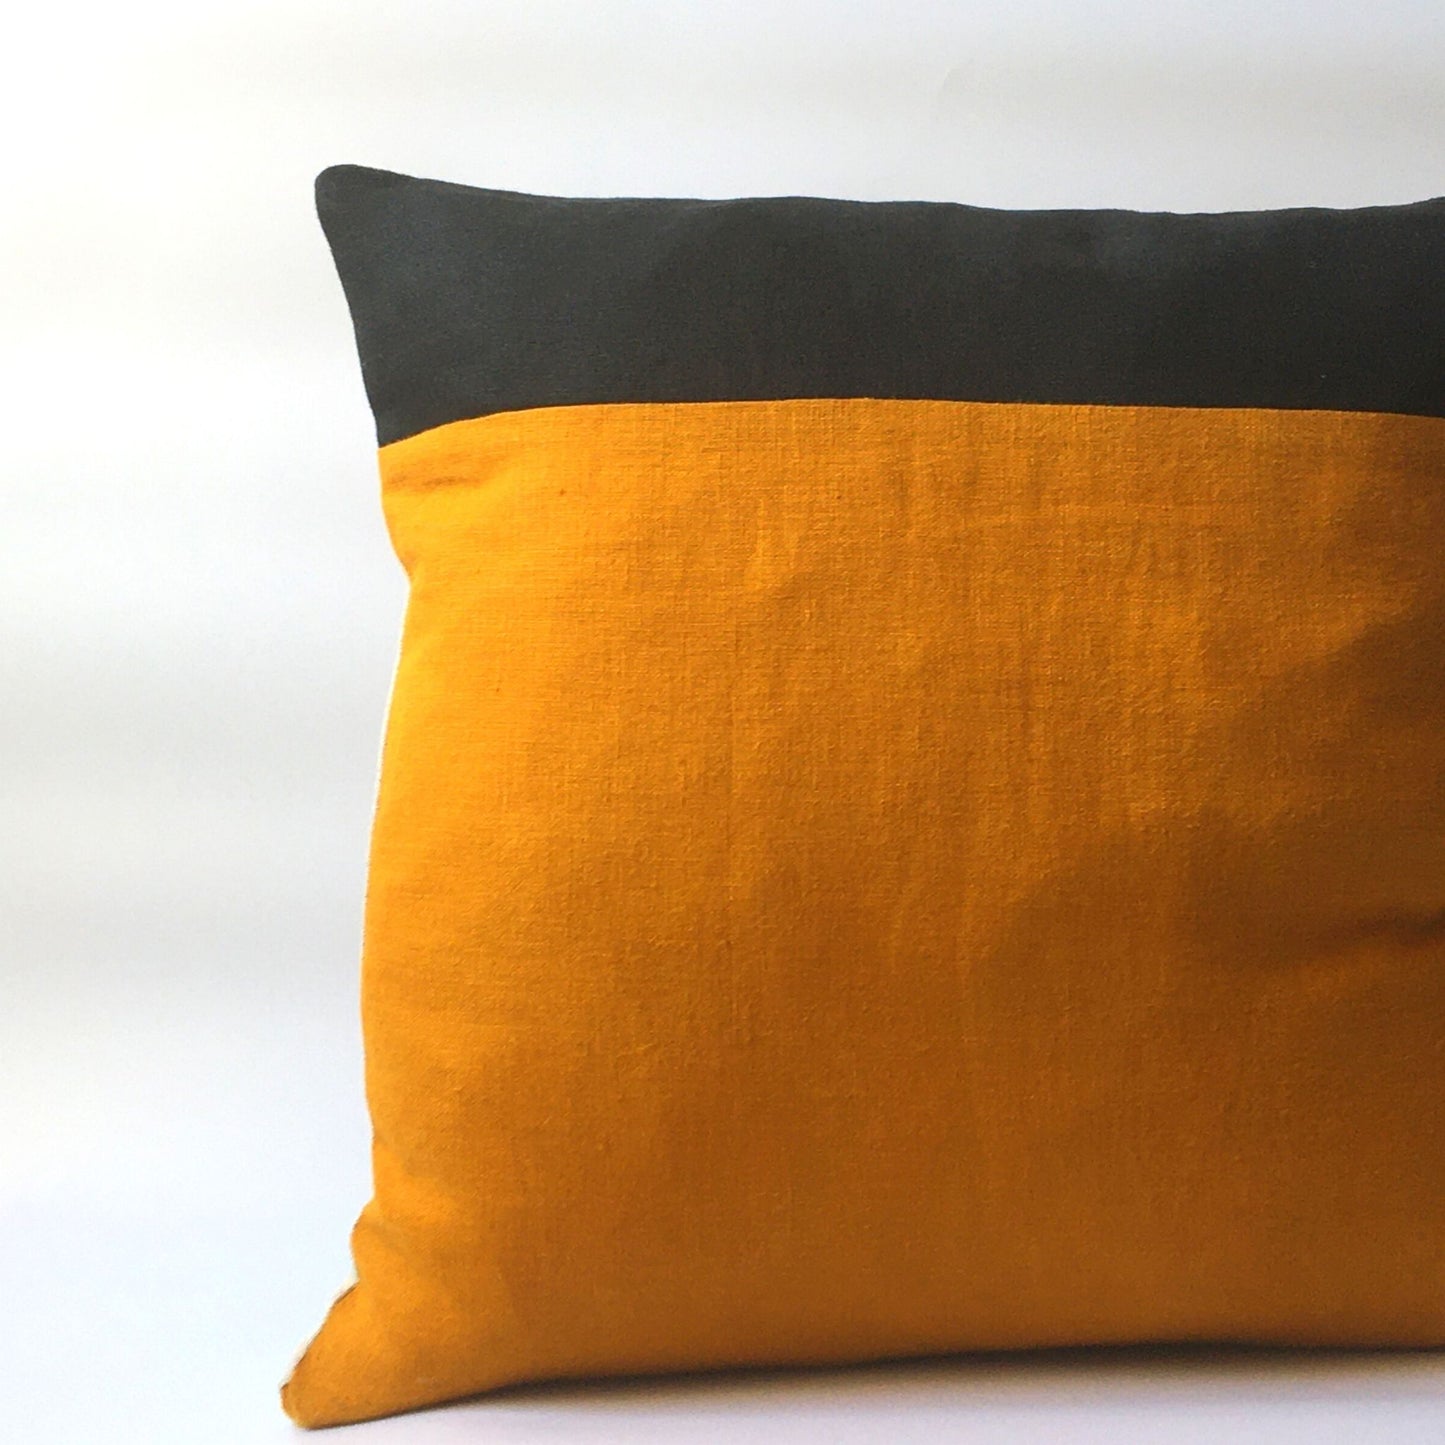 Colour block yellow and black cushion